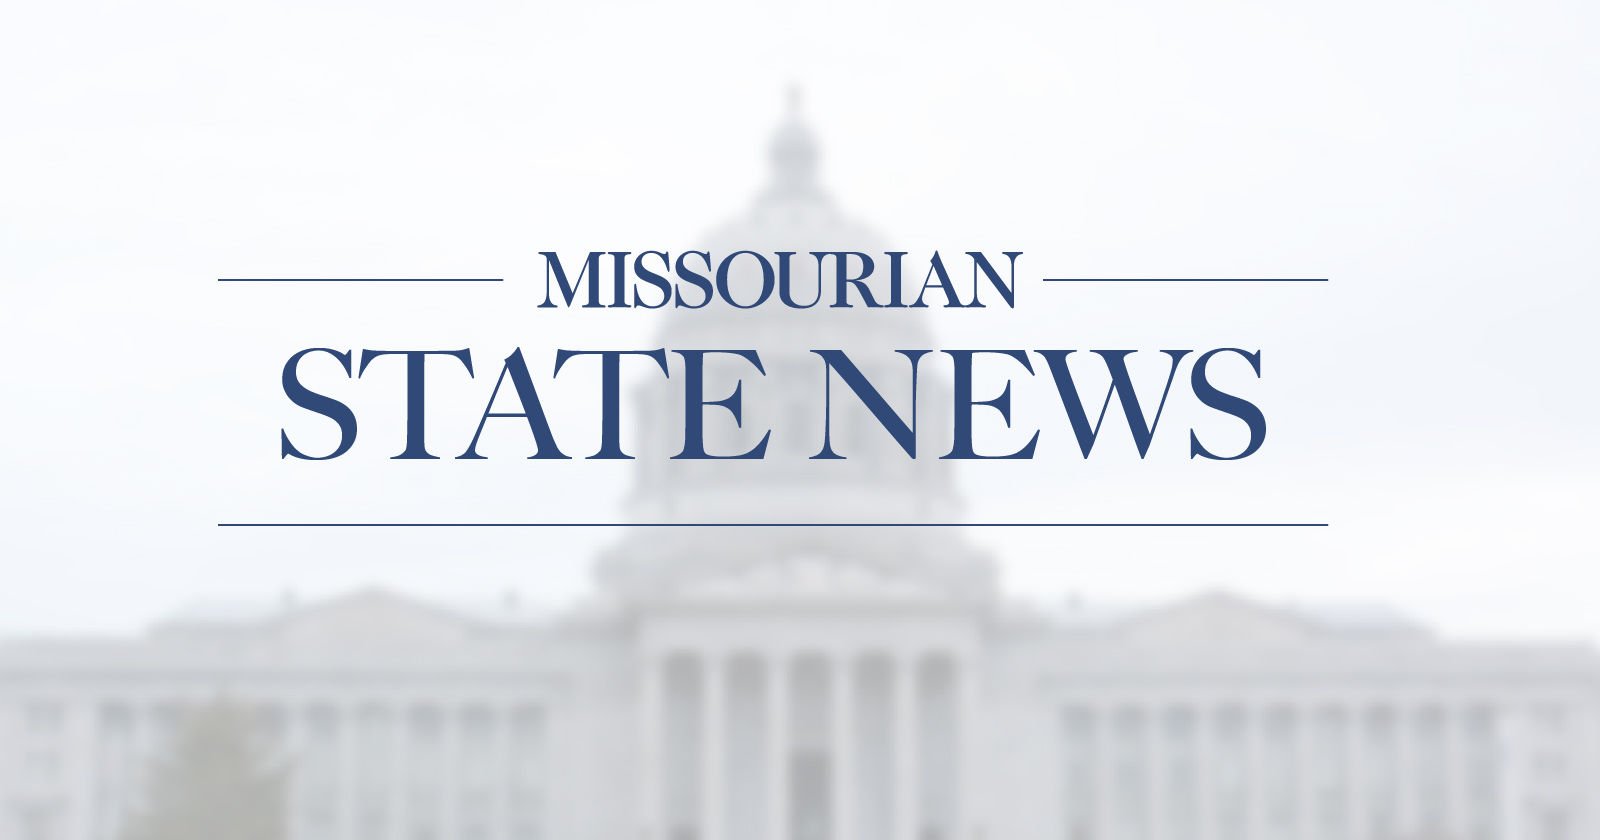 Missouri doulas are taking action to bridge maternal health gaps